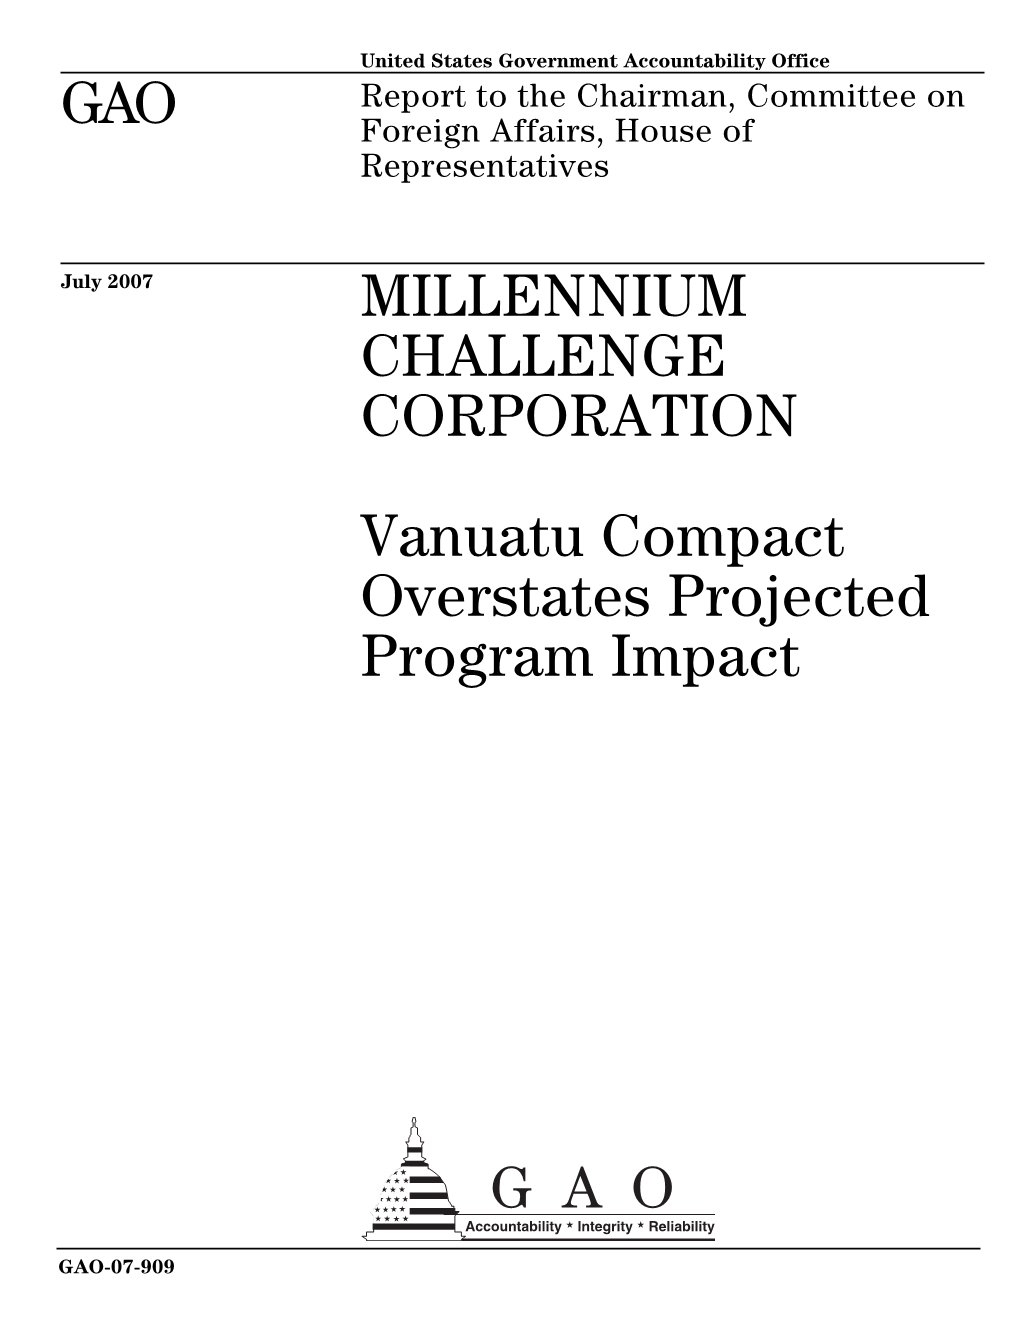 Vanuatu Compact Overstates Projected Program Impact